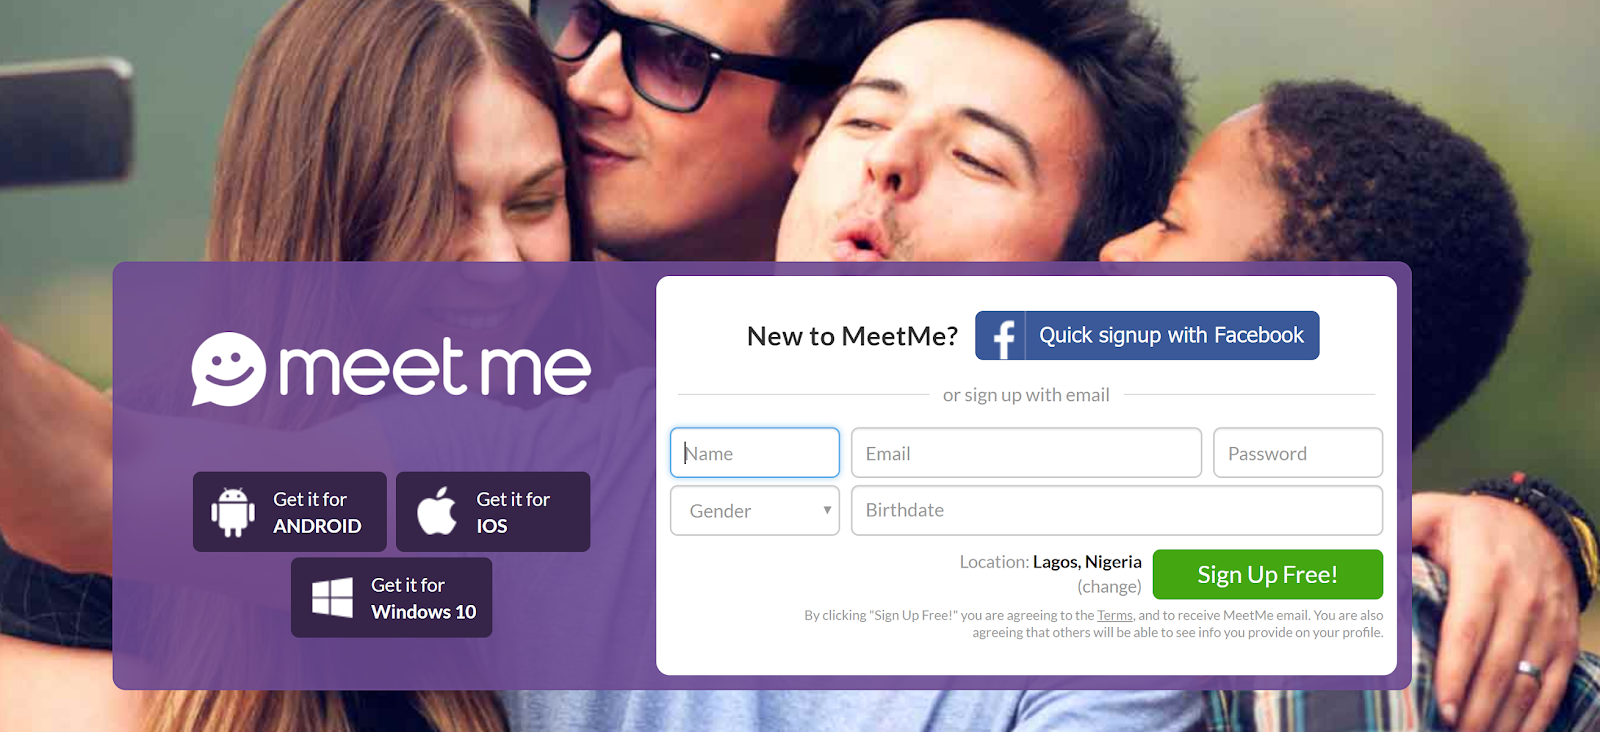 Meetme.com Sign up 2021 Guide: Create Account at www.meetme.com Portal (DIY...